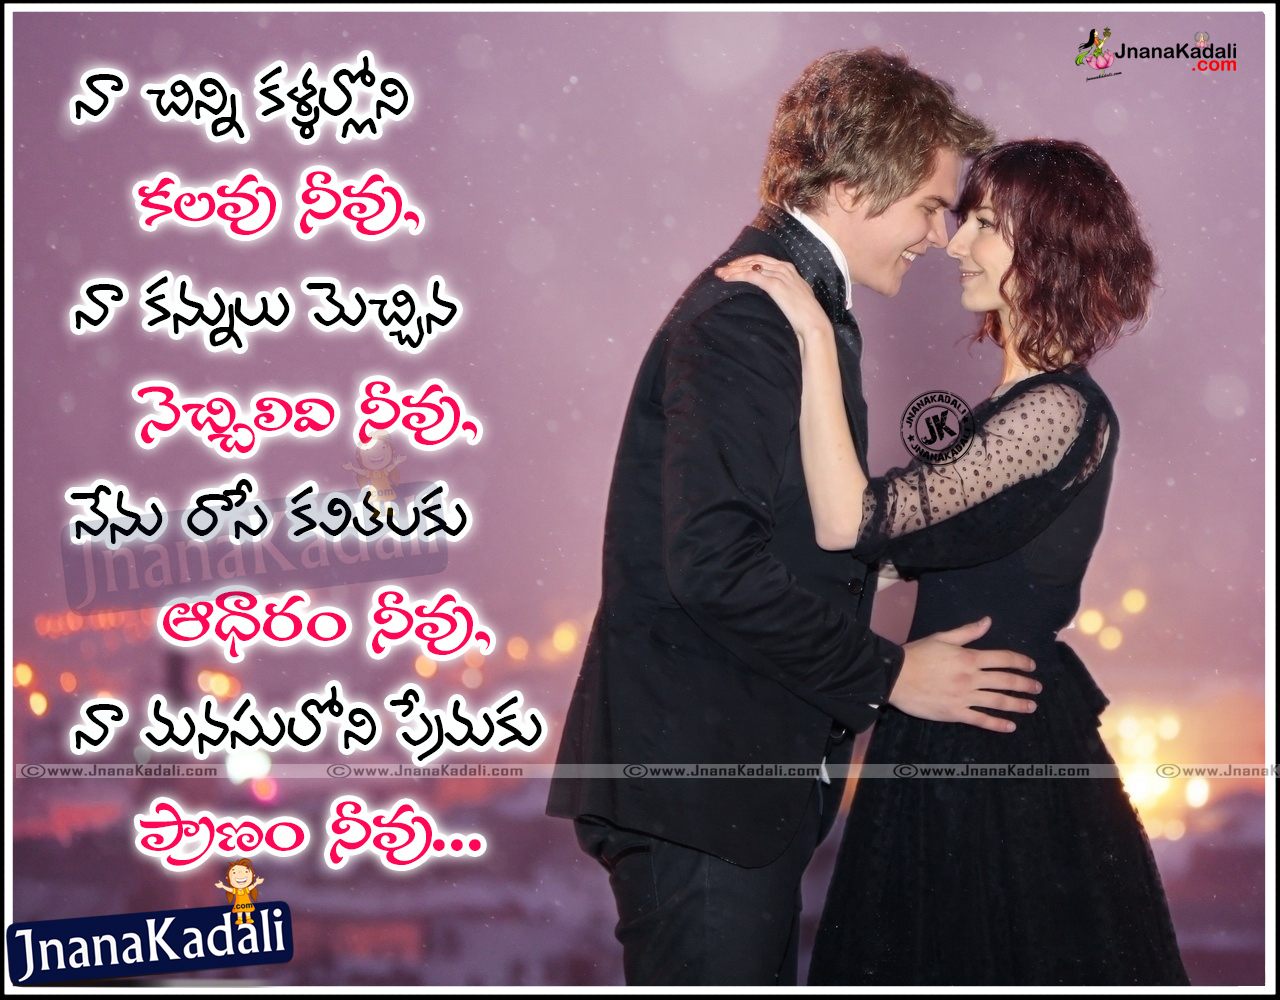 Best Telugu love proposal quotes messages | JNANA KADALI.COM |Telugu